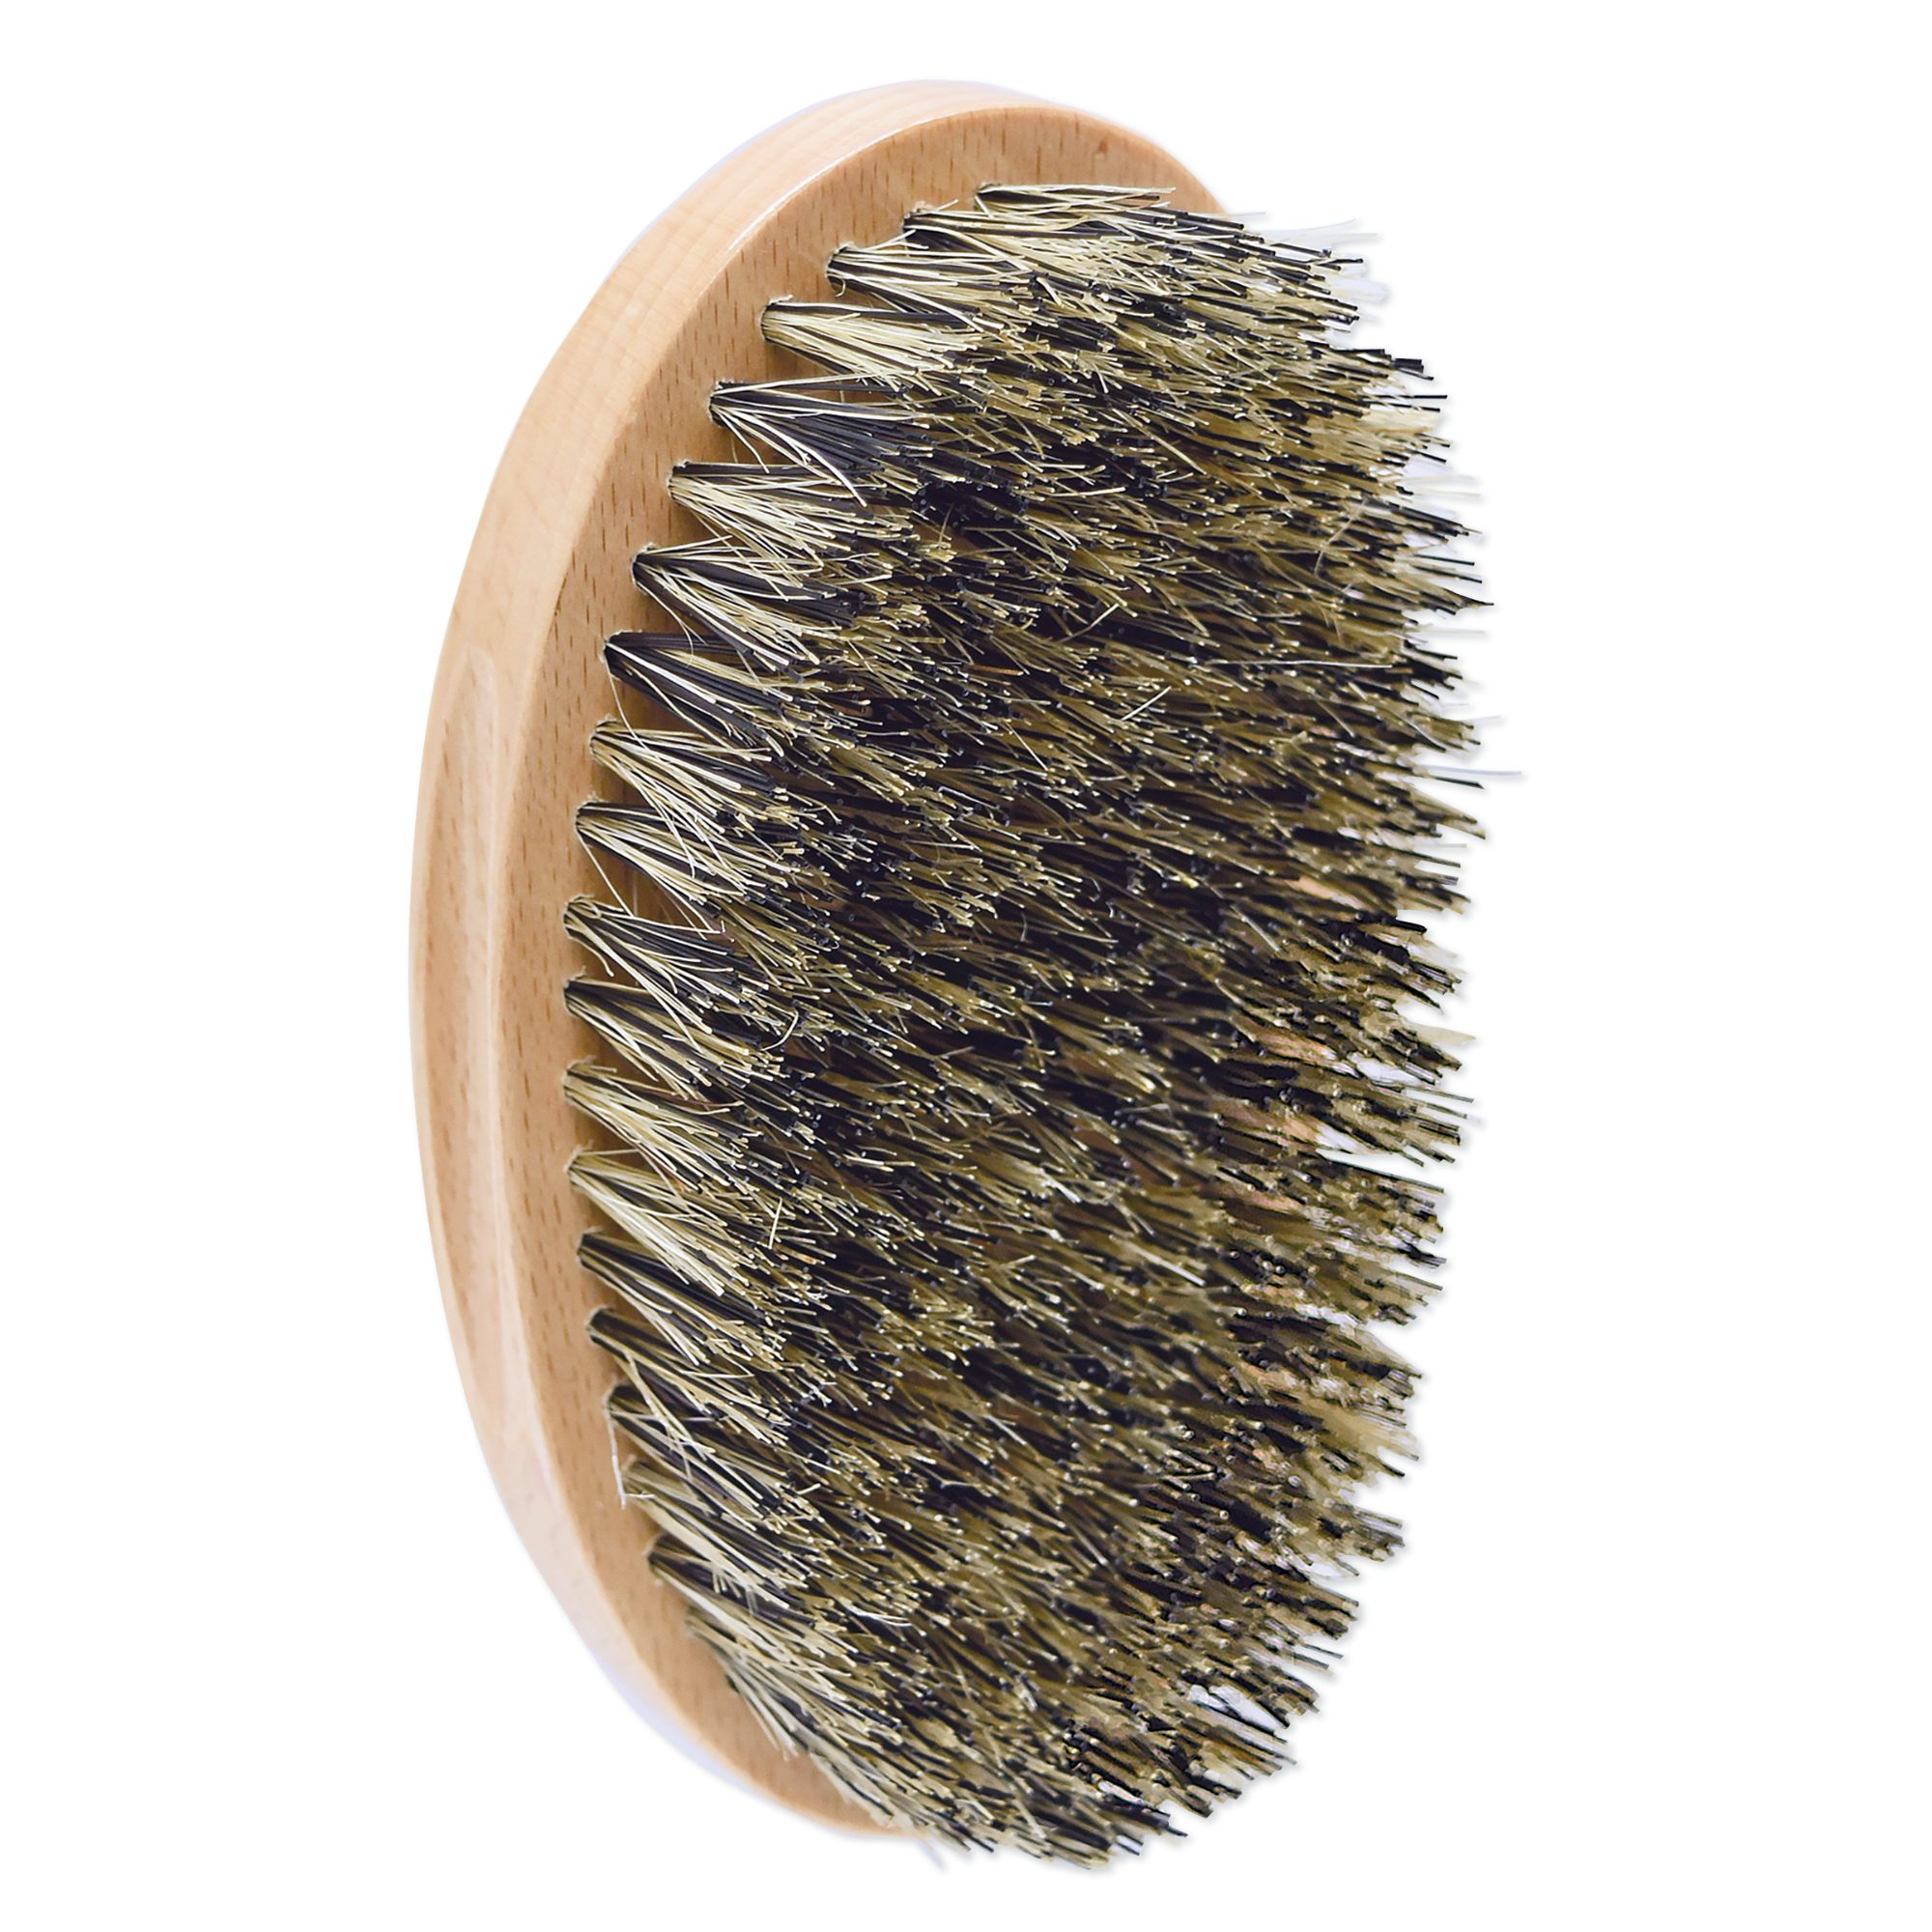 Curved Oval Palm Brush, Boar/Nylon Bristles